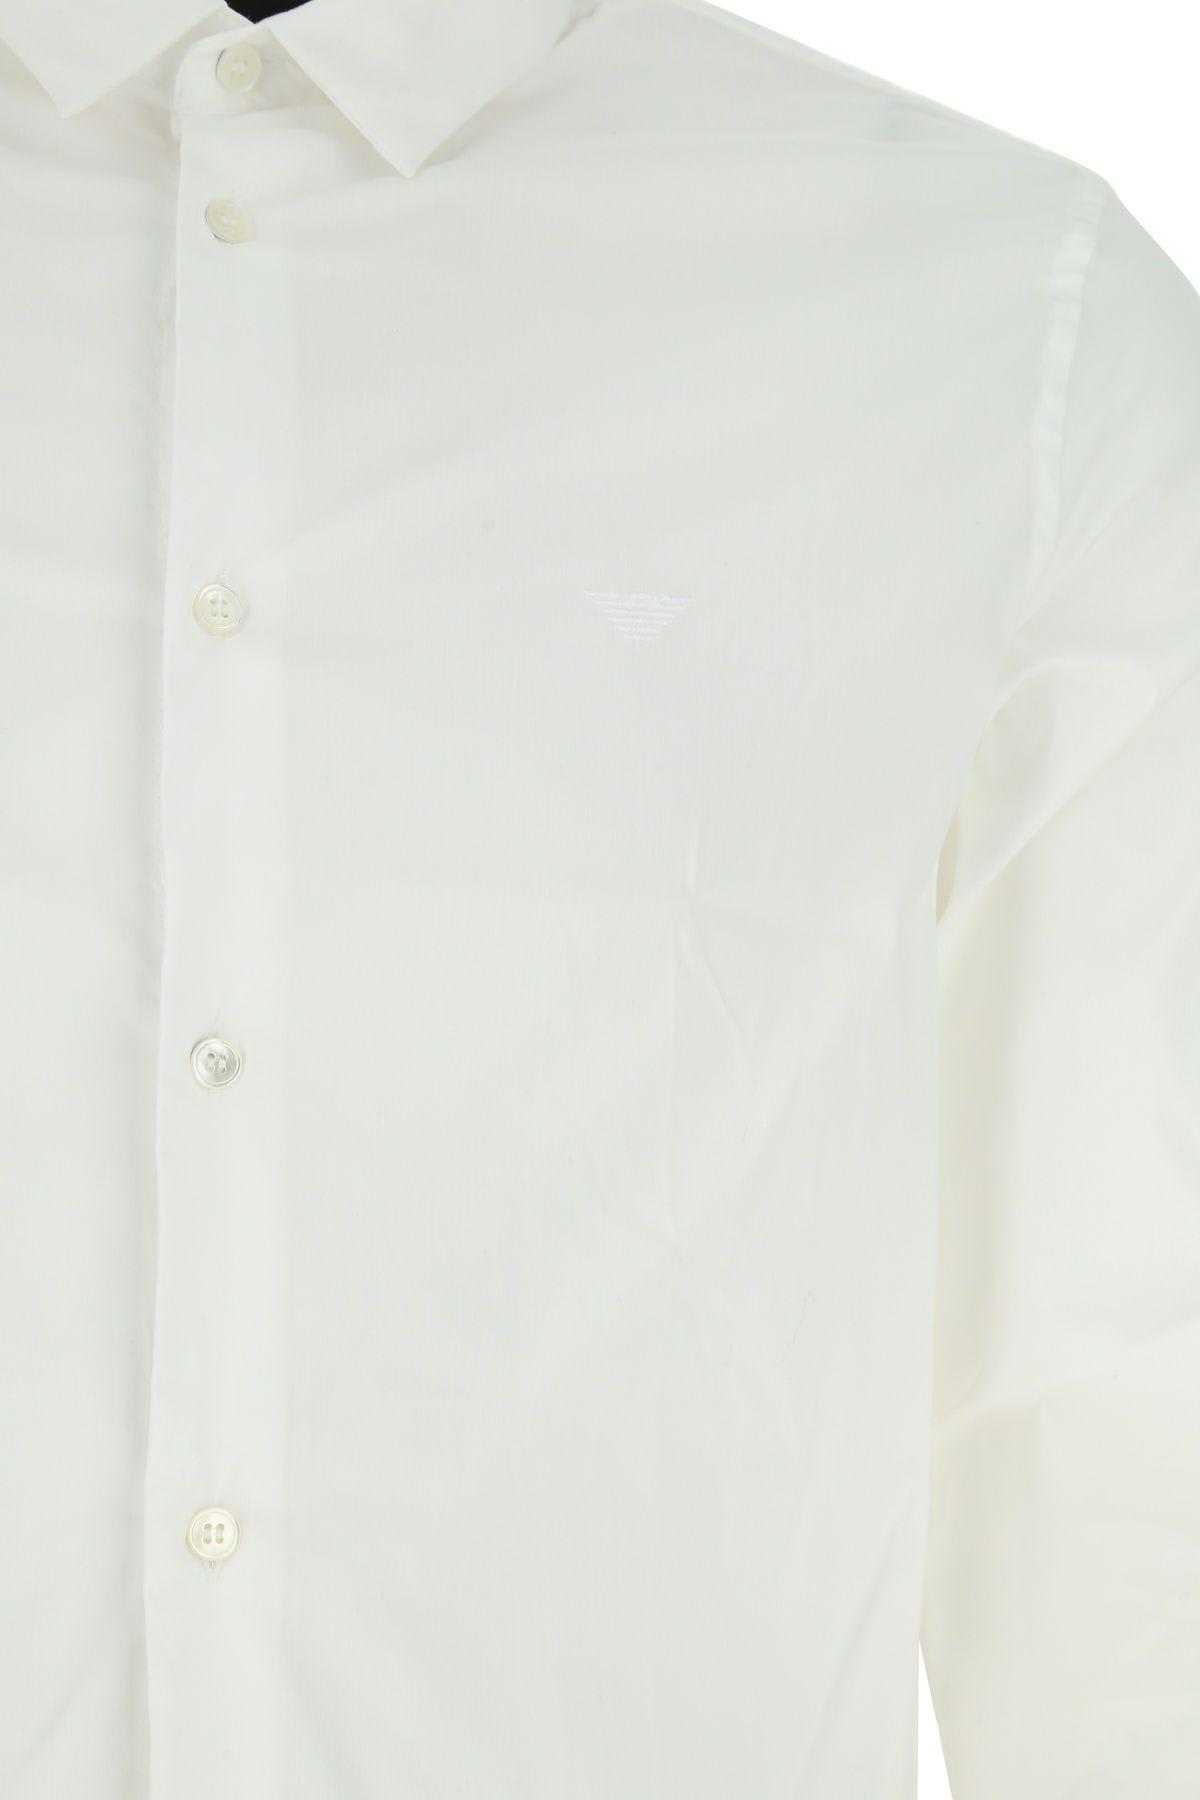 Shop Giorgio Armani White Poplin Shirt